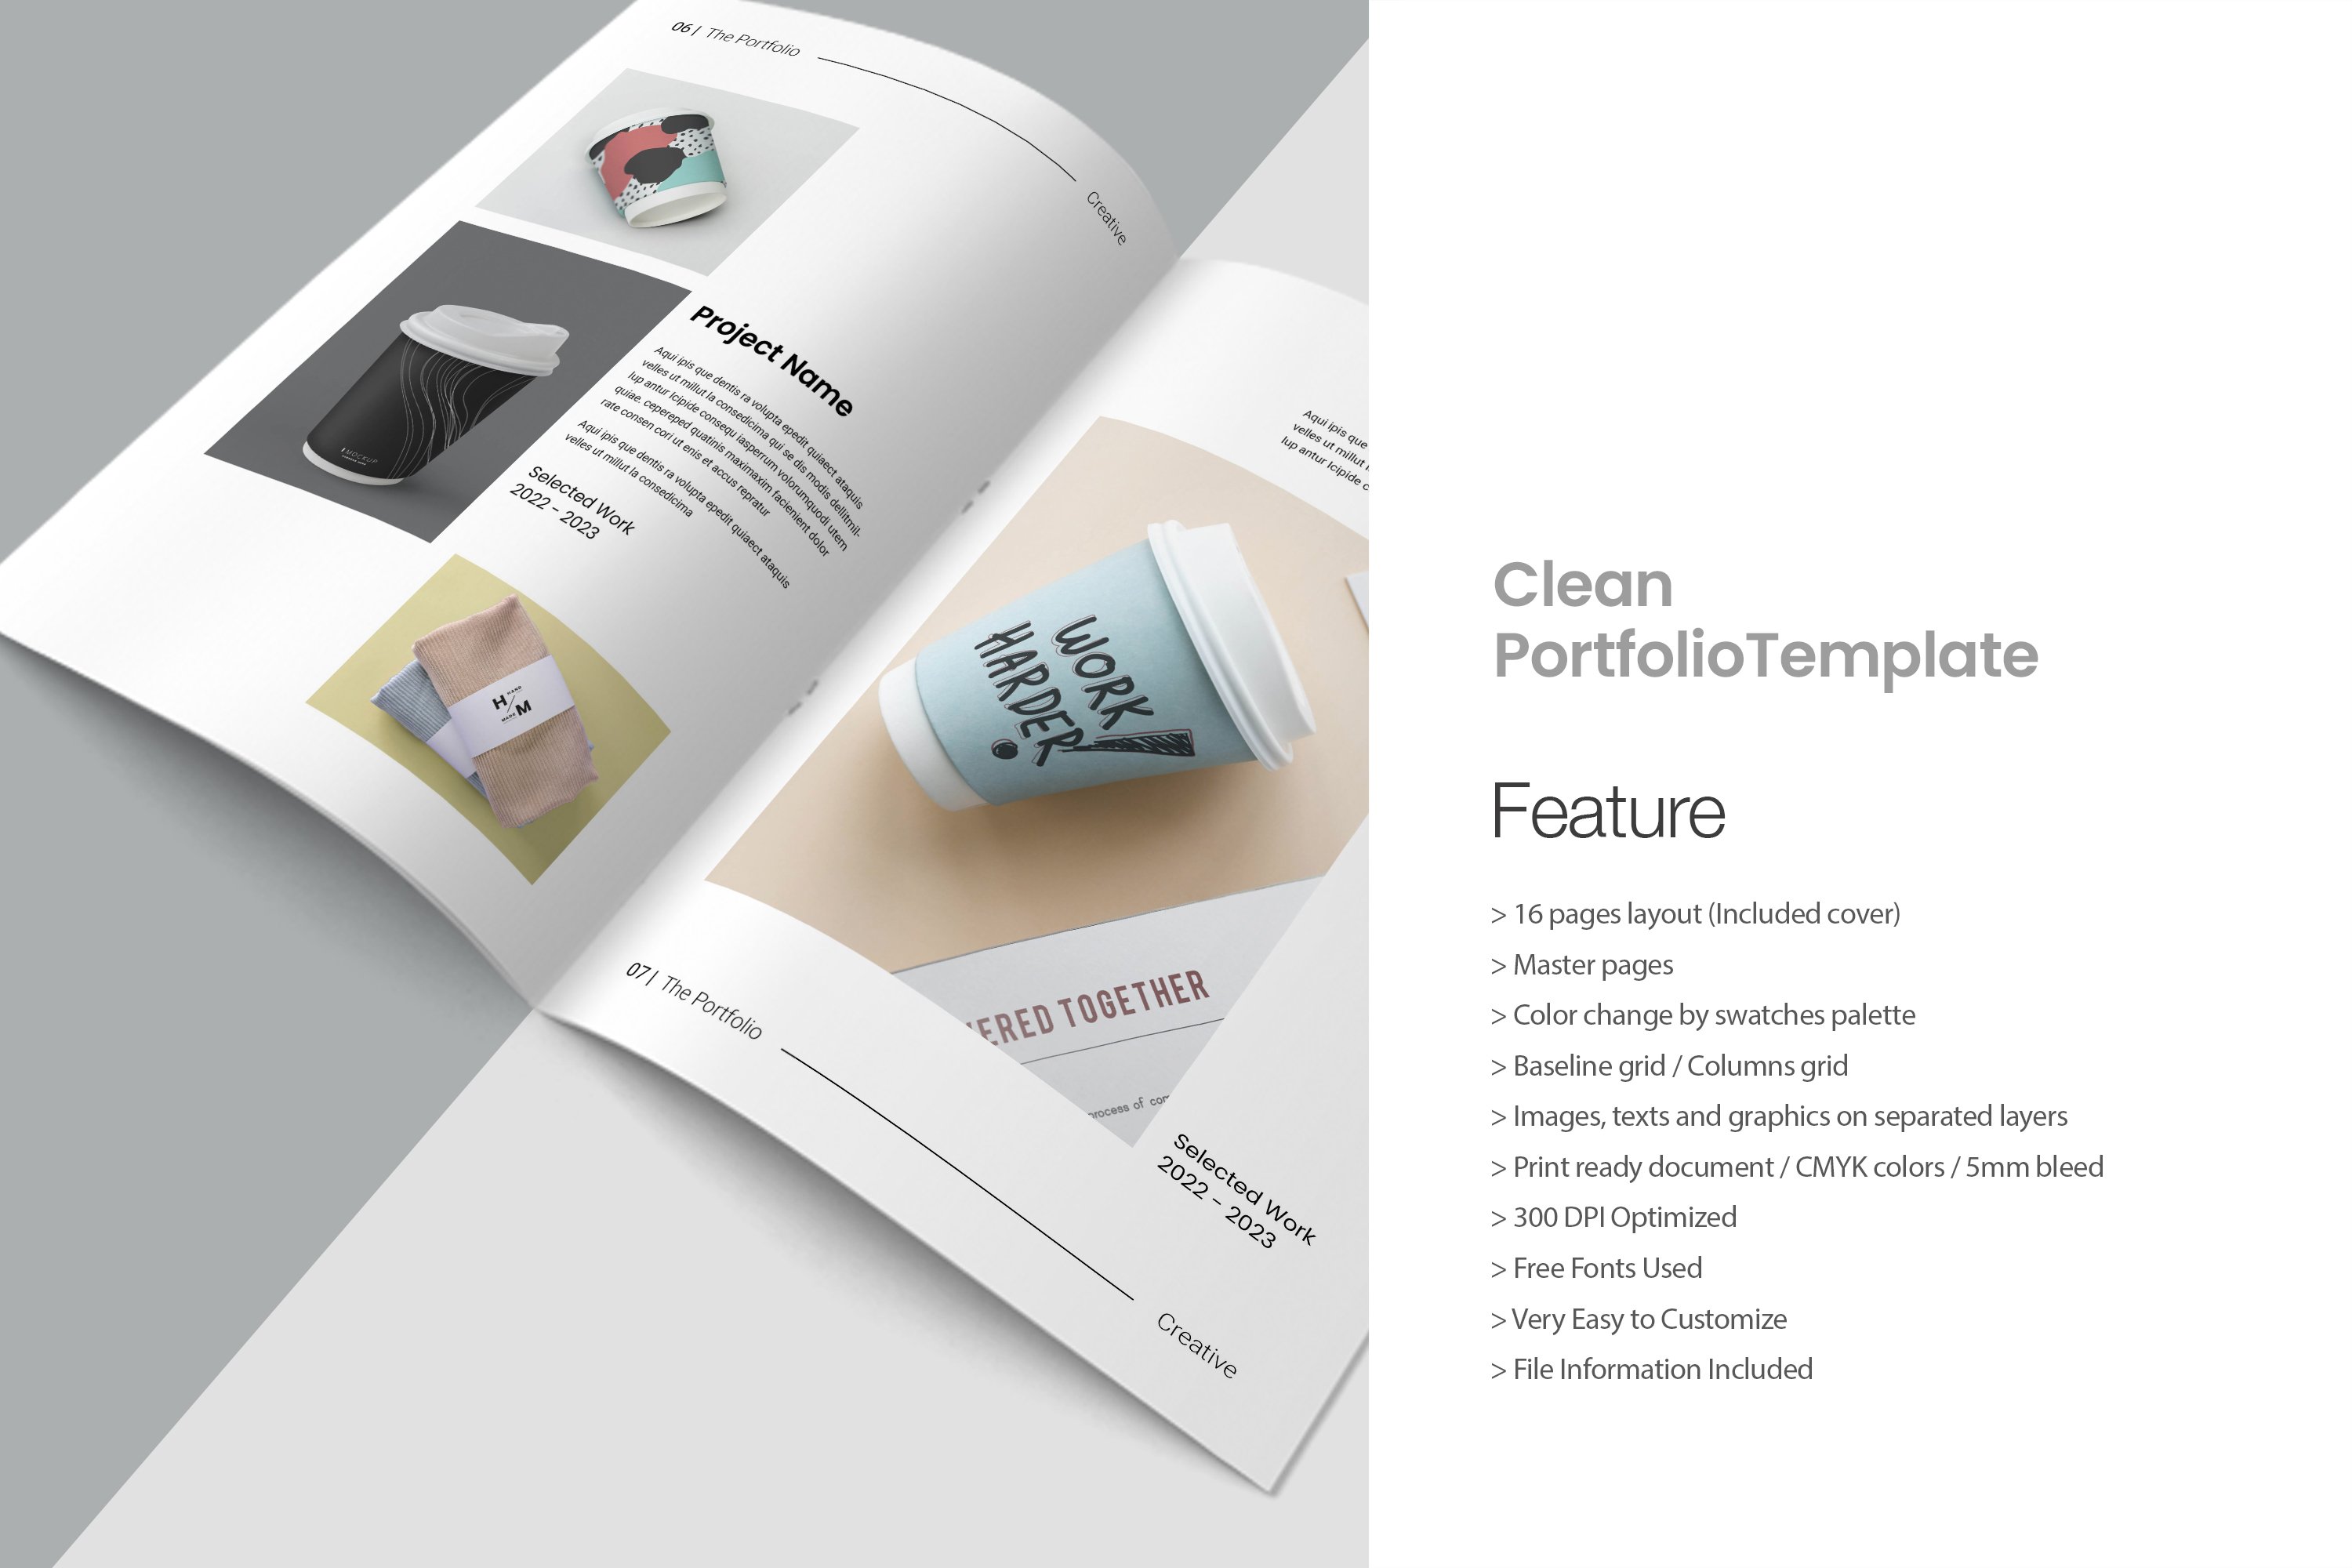 Clean Portfolio Template preview image.